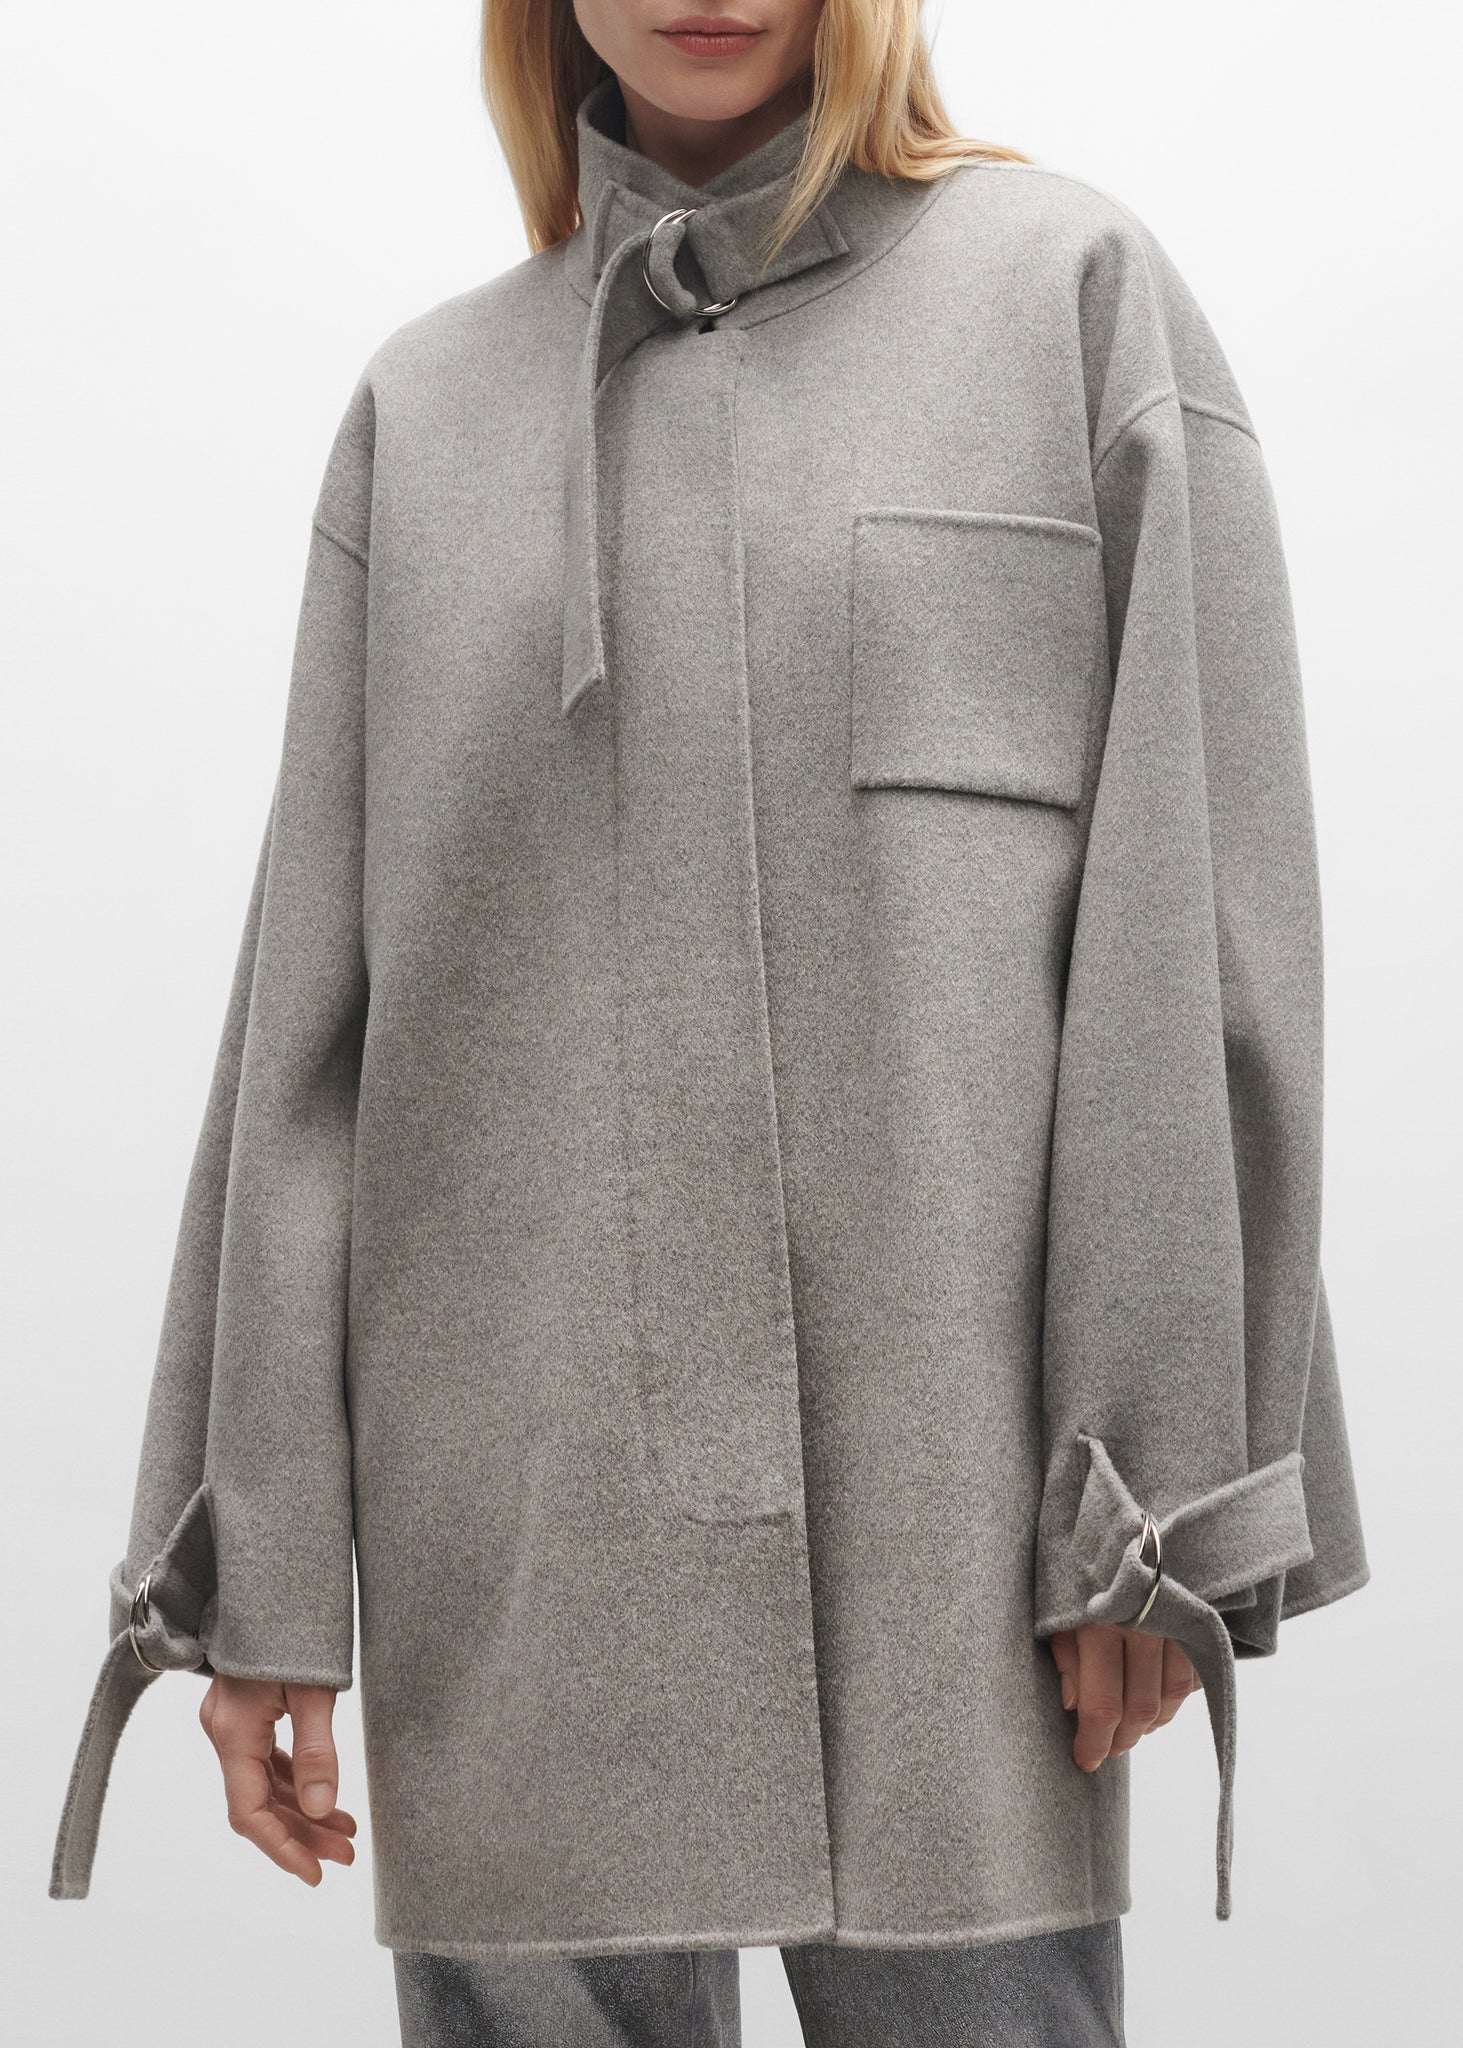 MARACAY | Wool Coat